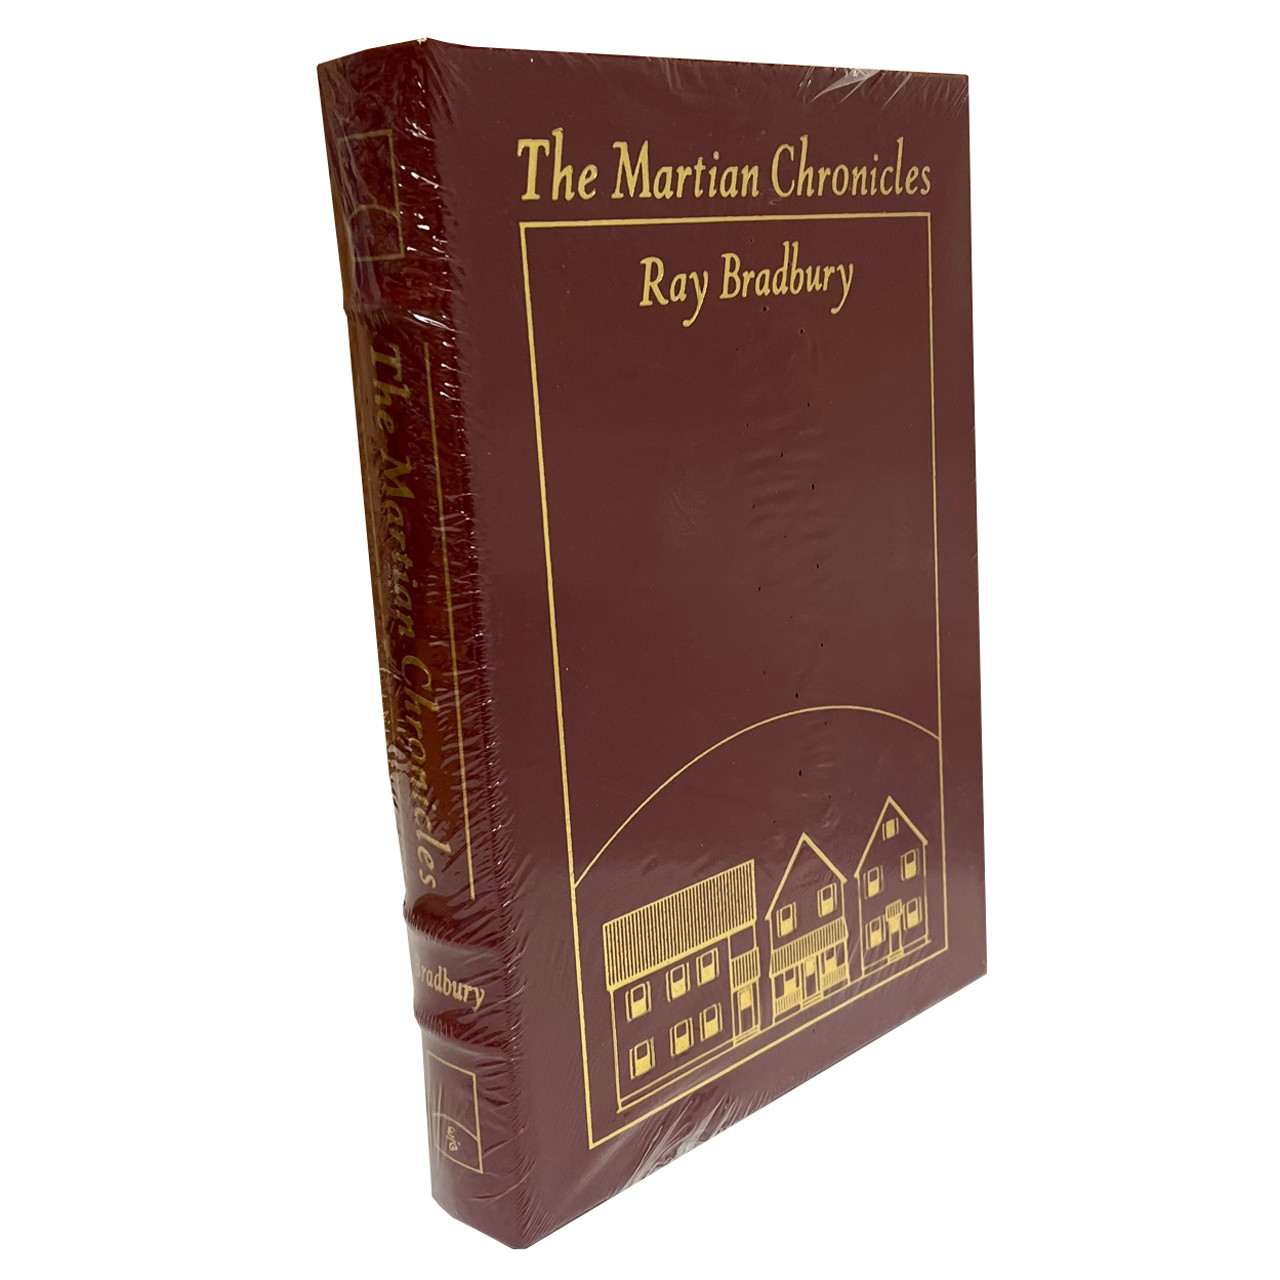 Ray Bradbury "The Martian Chronicles" Signed Limited Edition w/COA [Sealed]